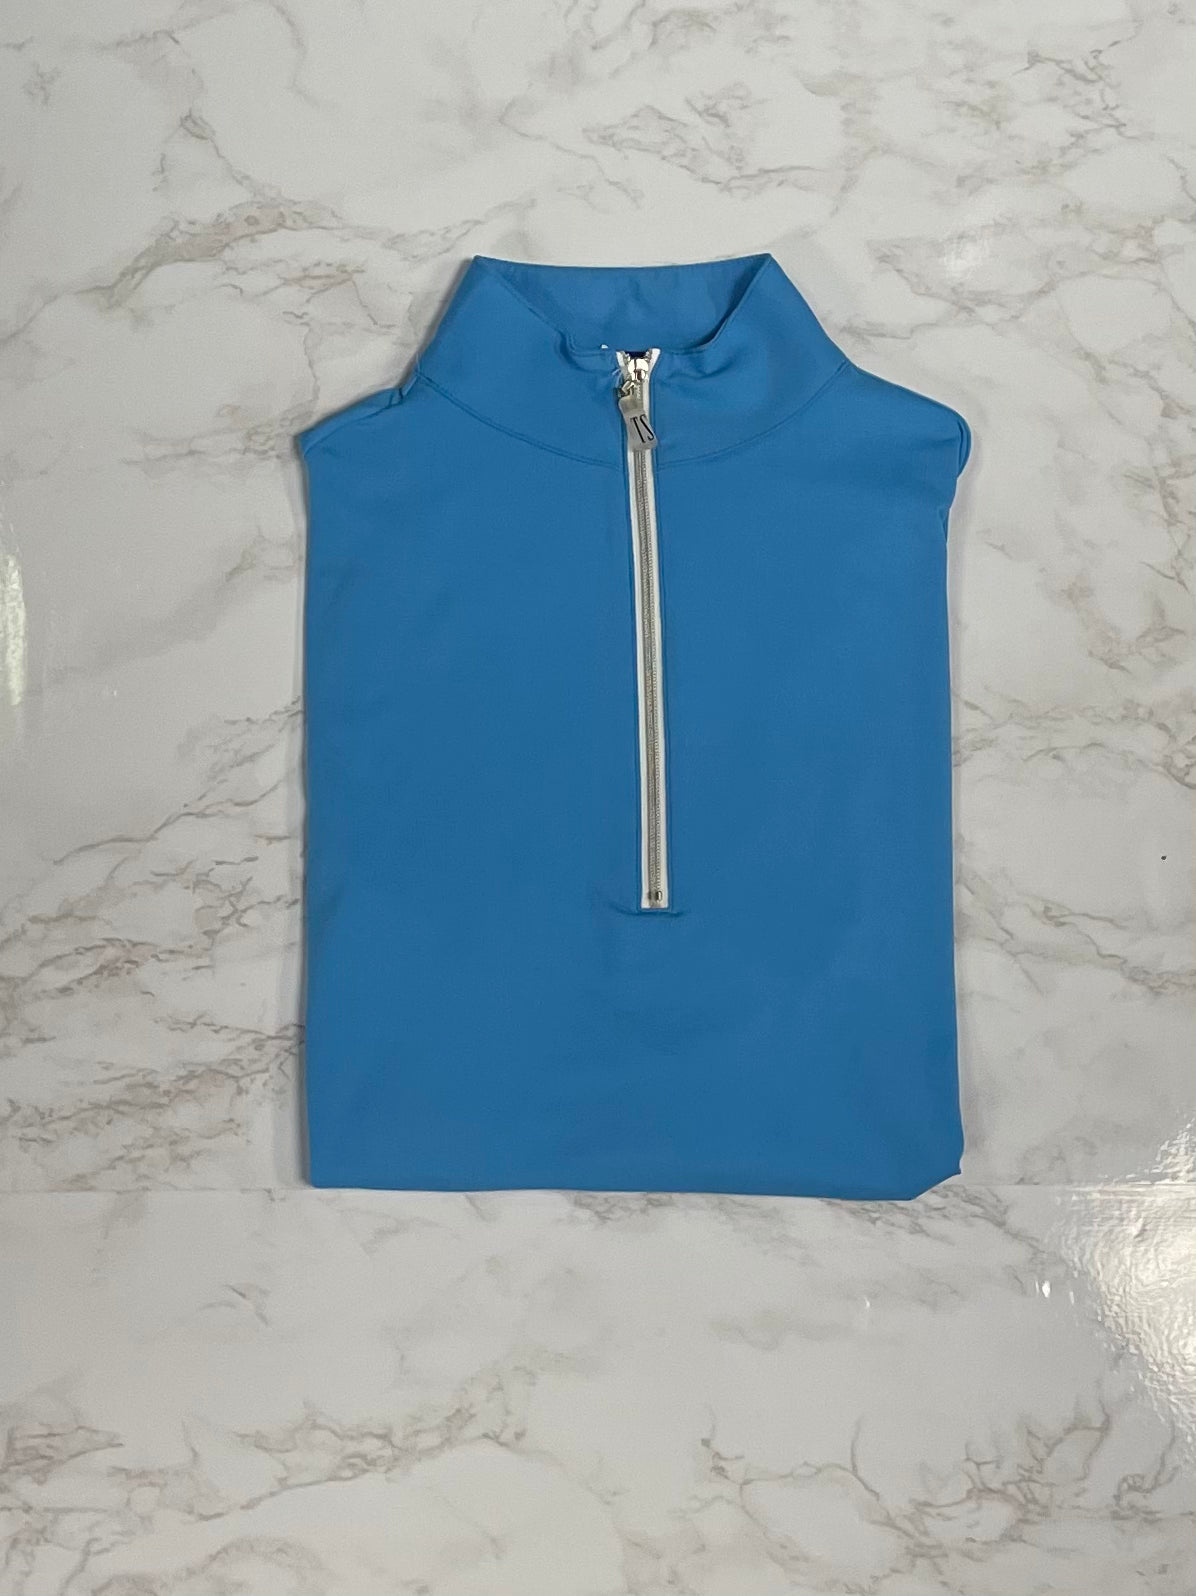 Tailored Sportsman IceFil Zip Top Shirt Long Sleeve